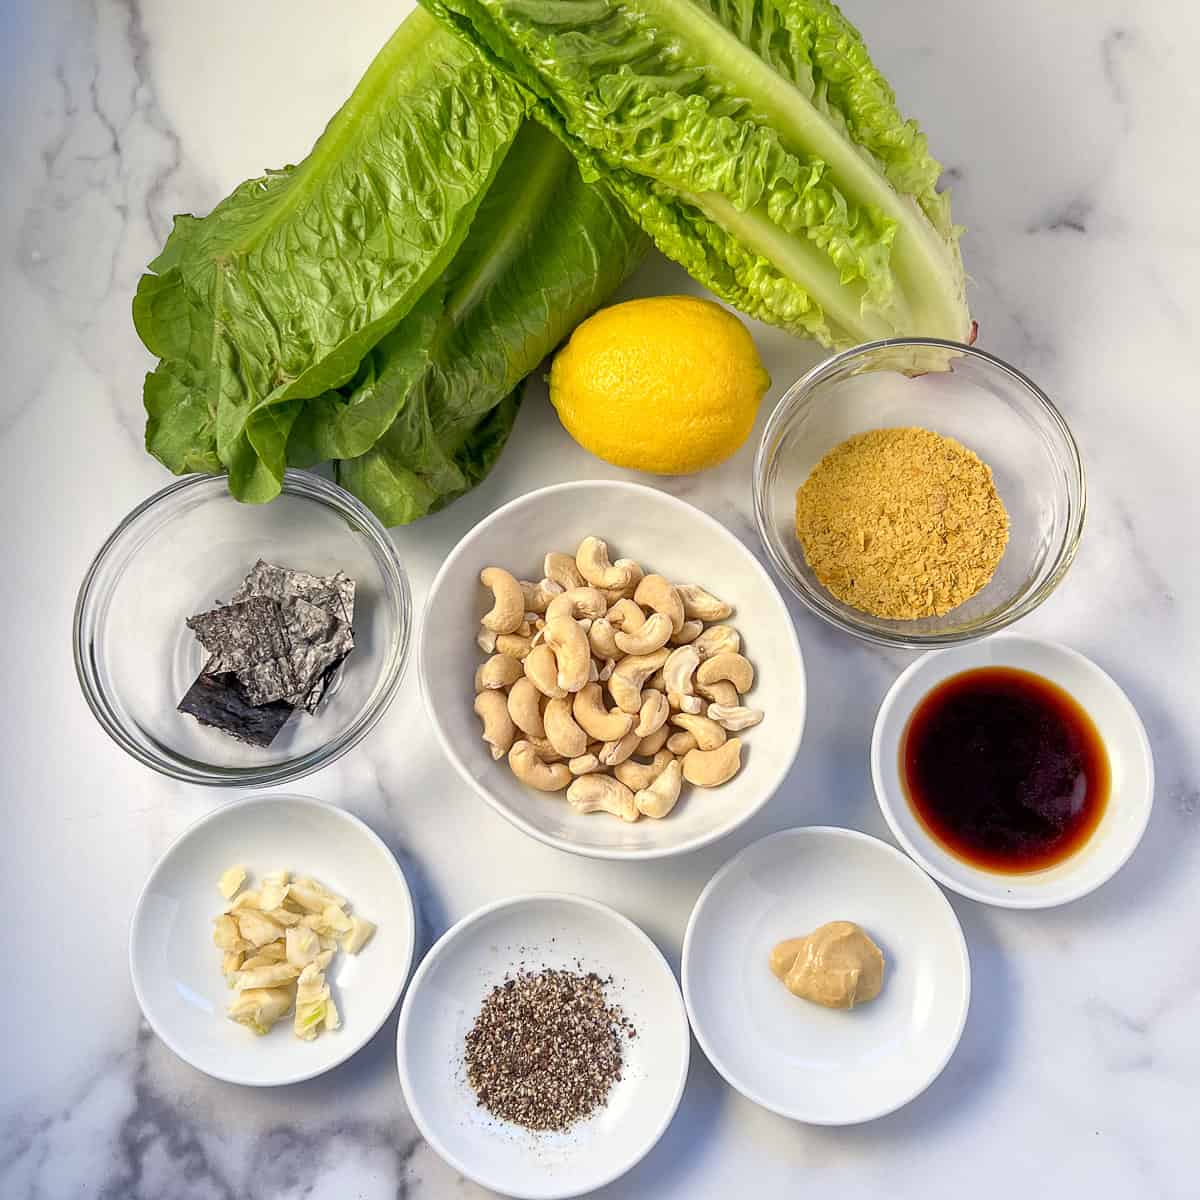 Ingredients for vegan caesar salad: romaine lettuce, lemon, cashews, nori, nutritional yeast, garlic, dijon mustard and black pepper.